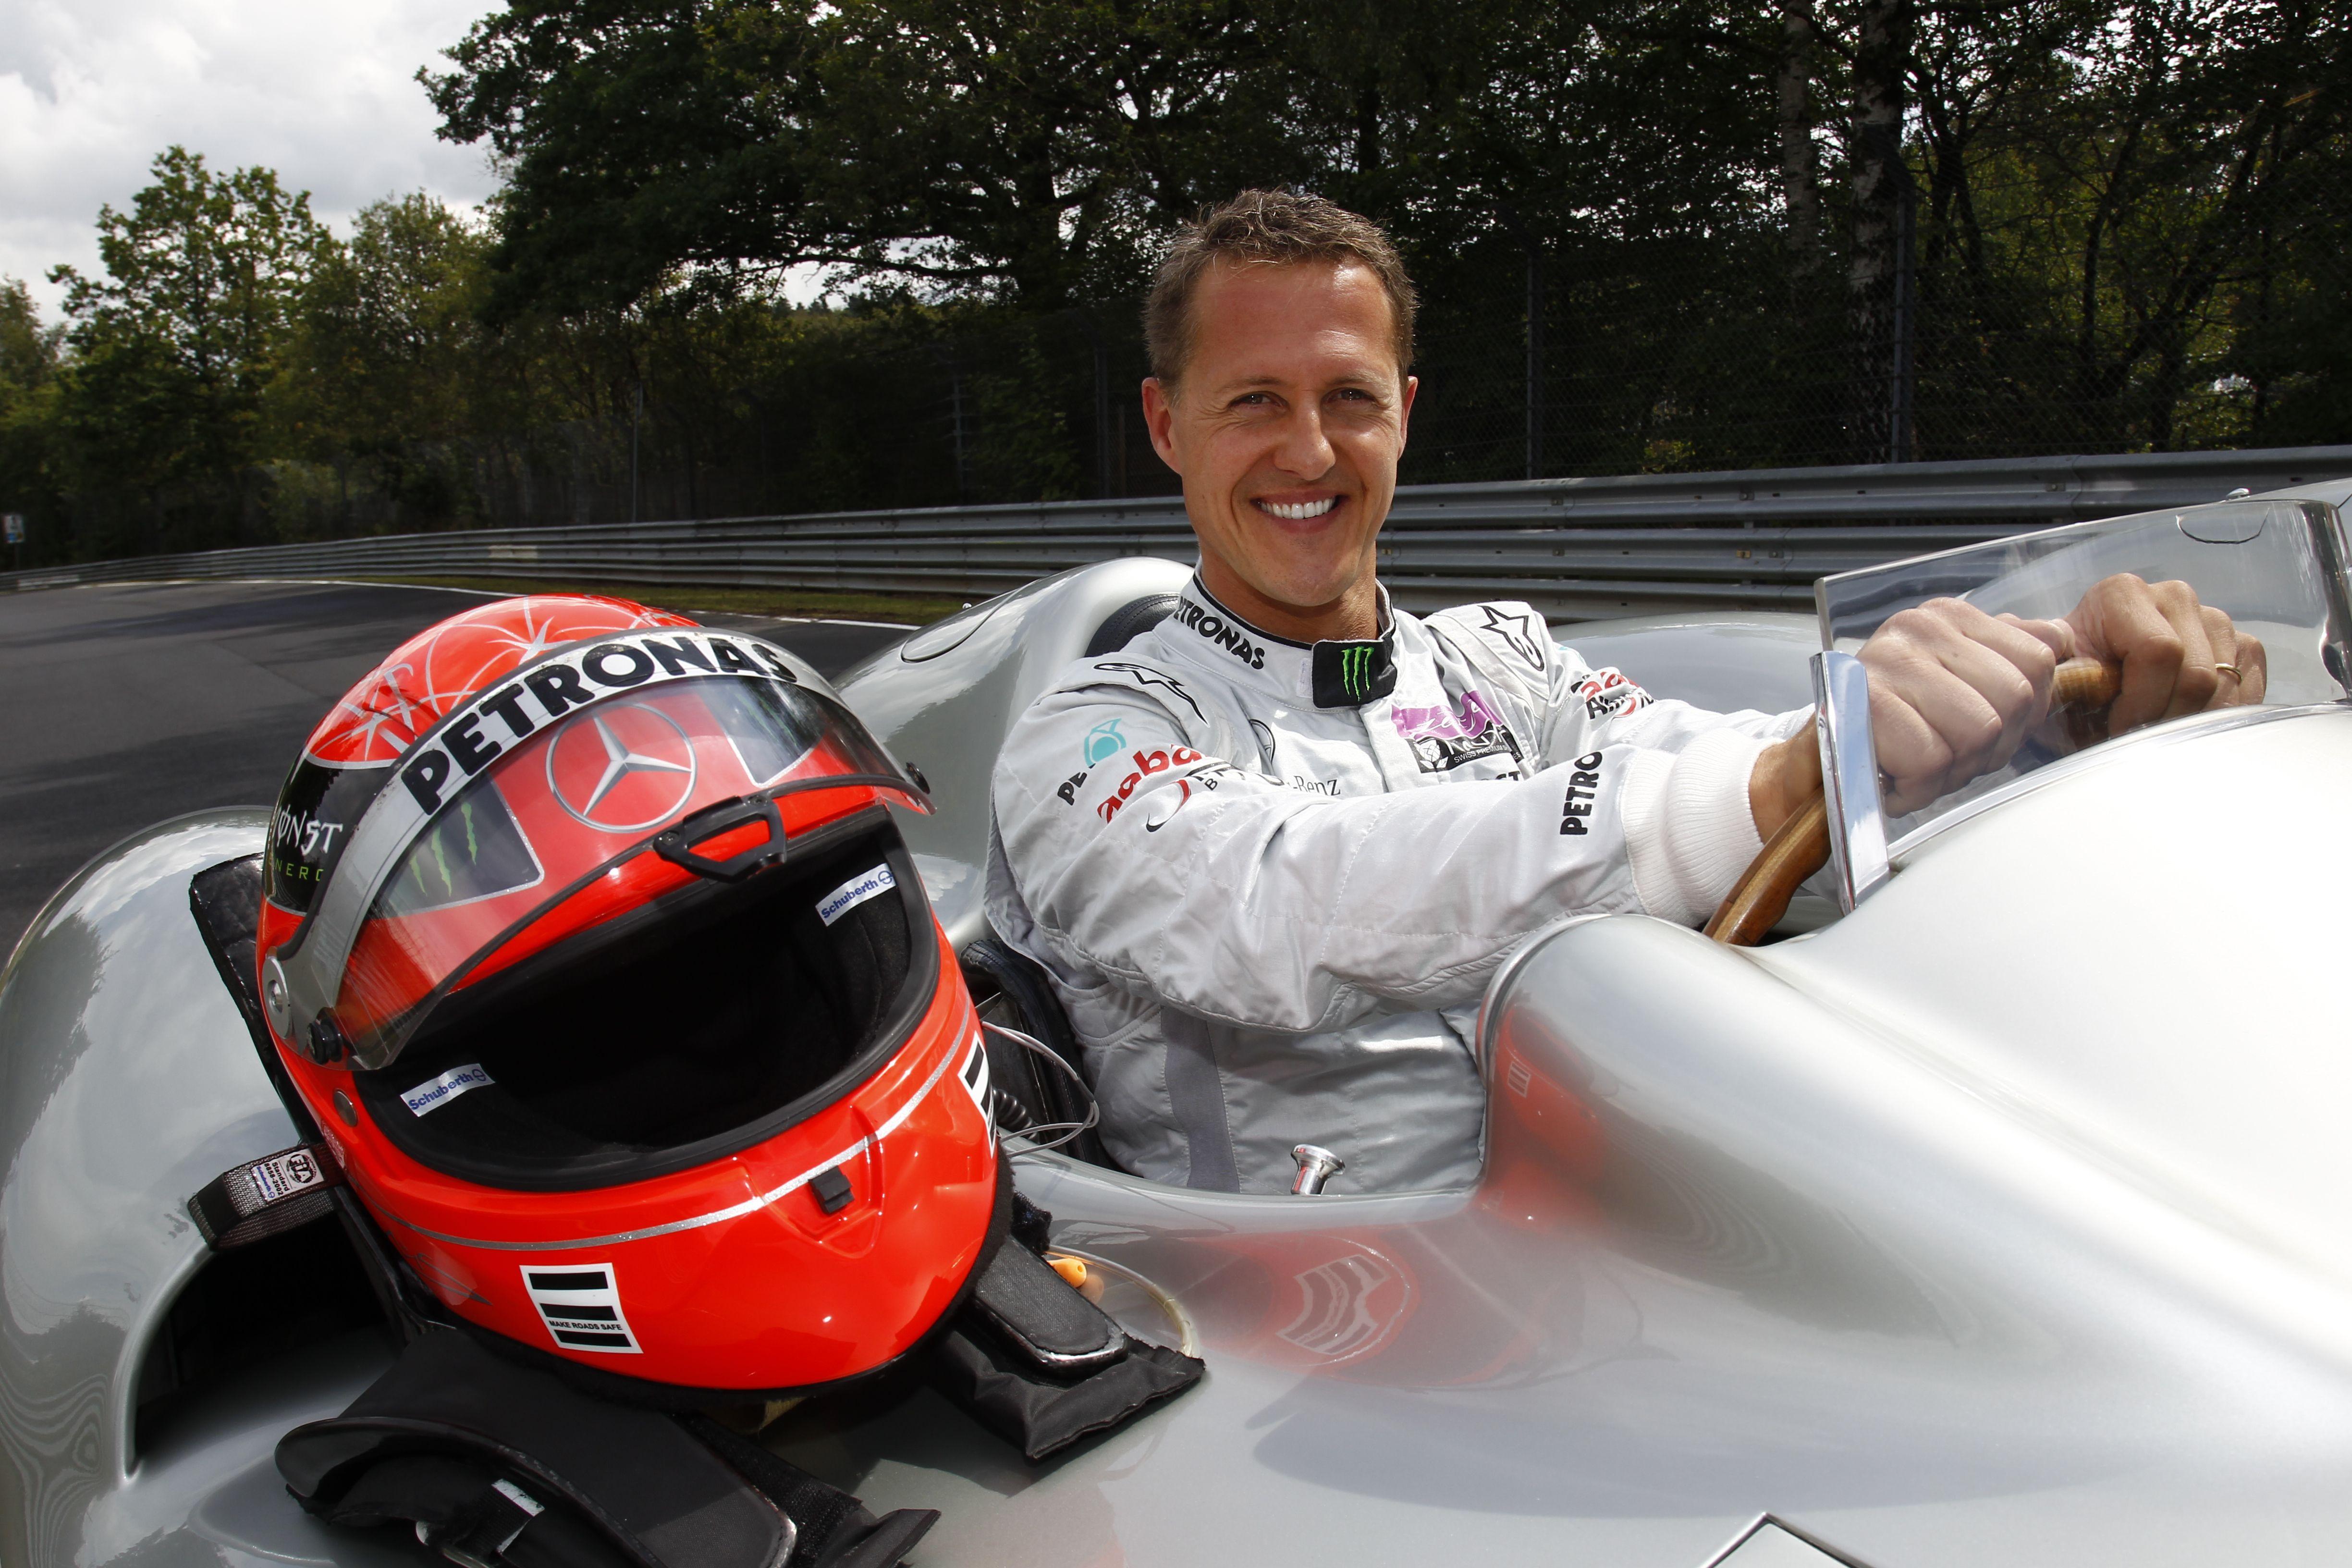 Michael Schumacher Wallpaper Image Photo Picture Background